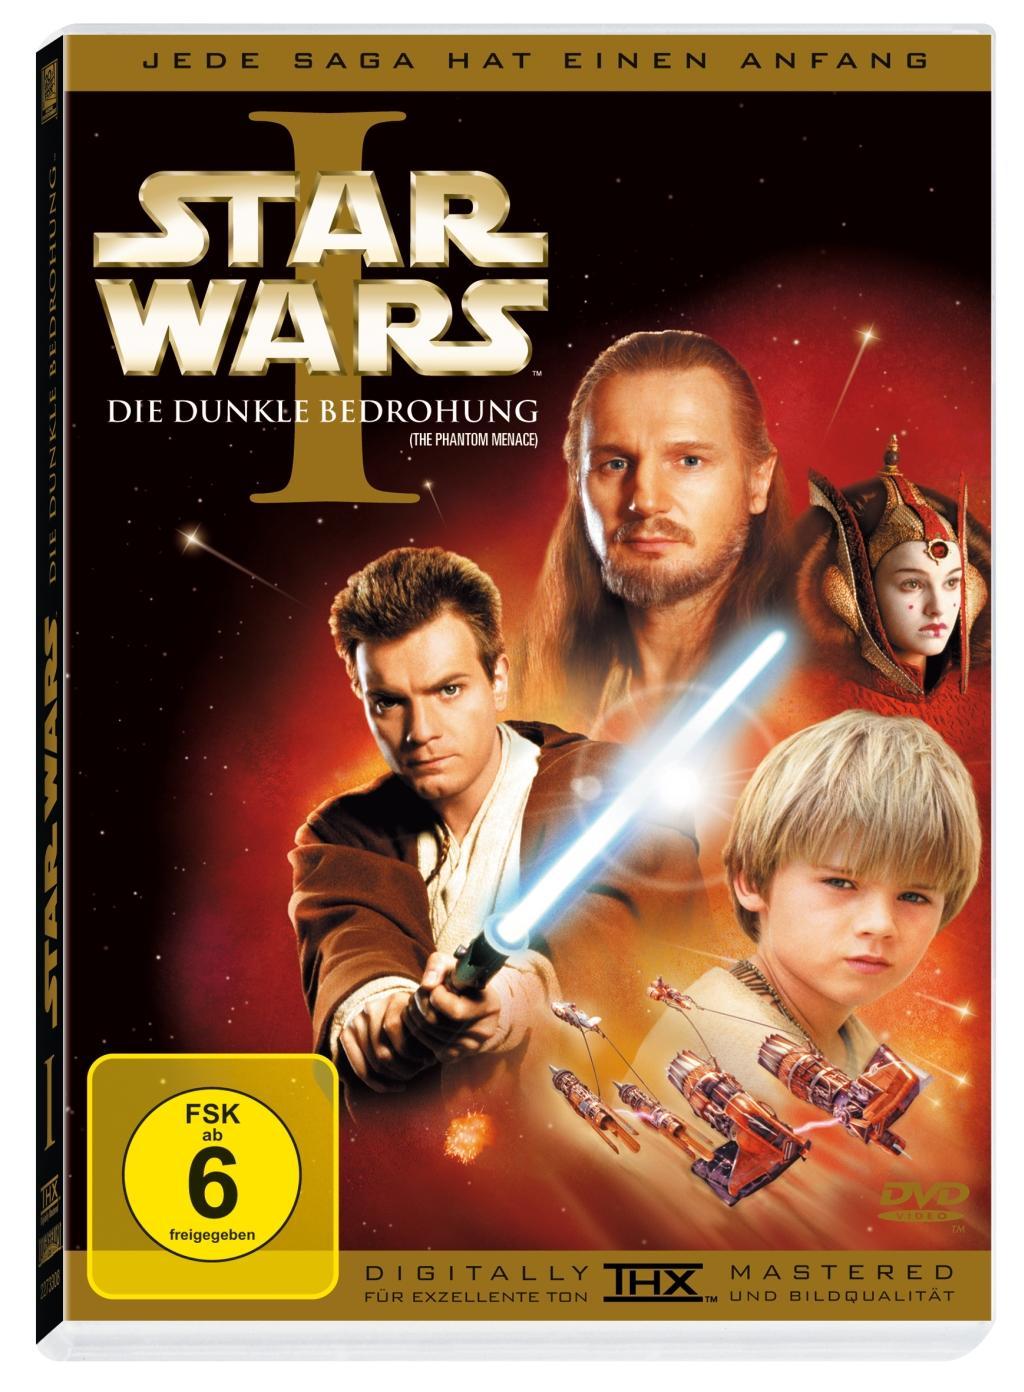 Видео Star Wars Episode 1, Die dunkle Bedrohung, 1 DVD George Lucas